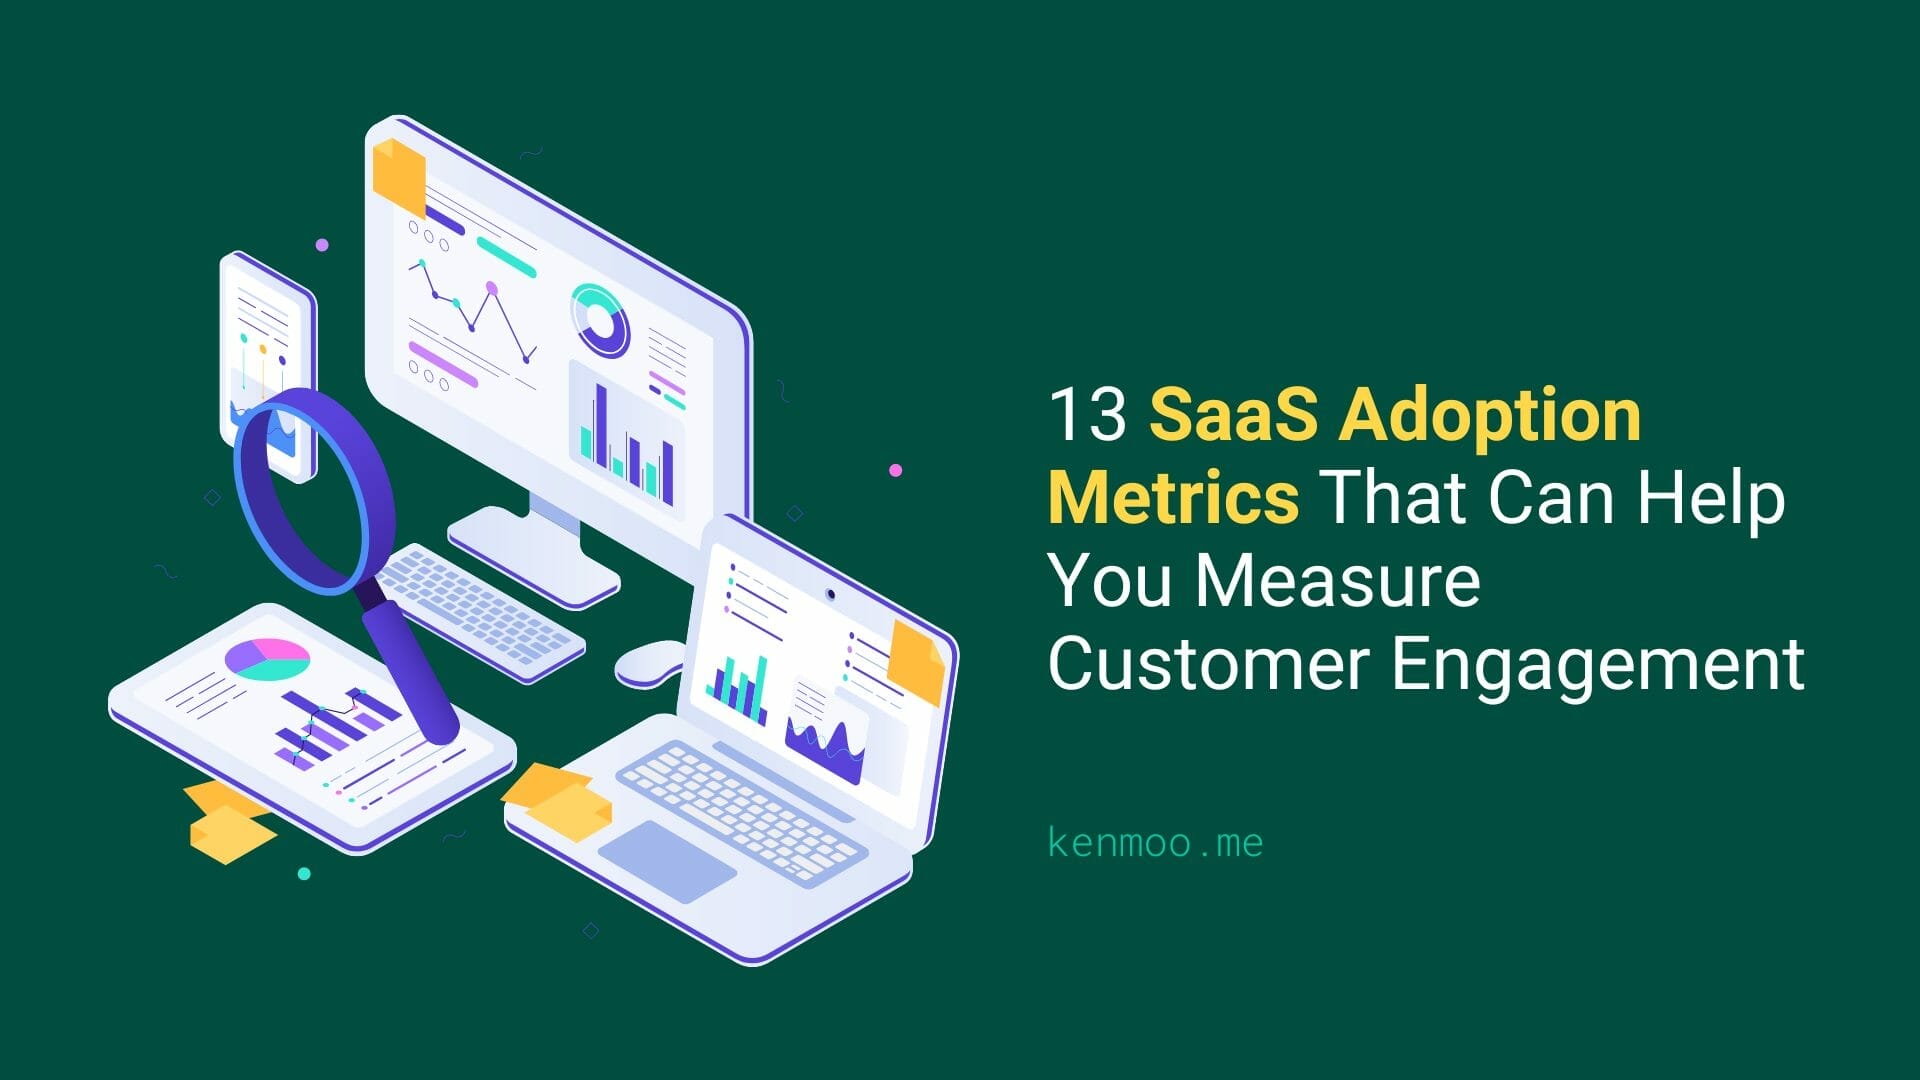 13 SaaS Adoption Metrics That Can Help You Measure Customer Engagement